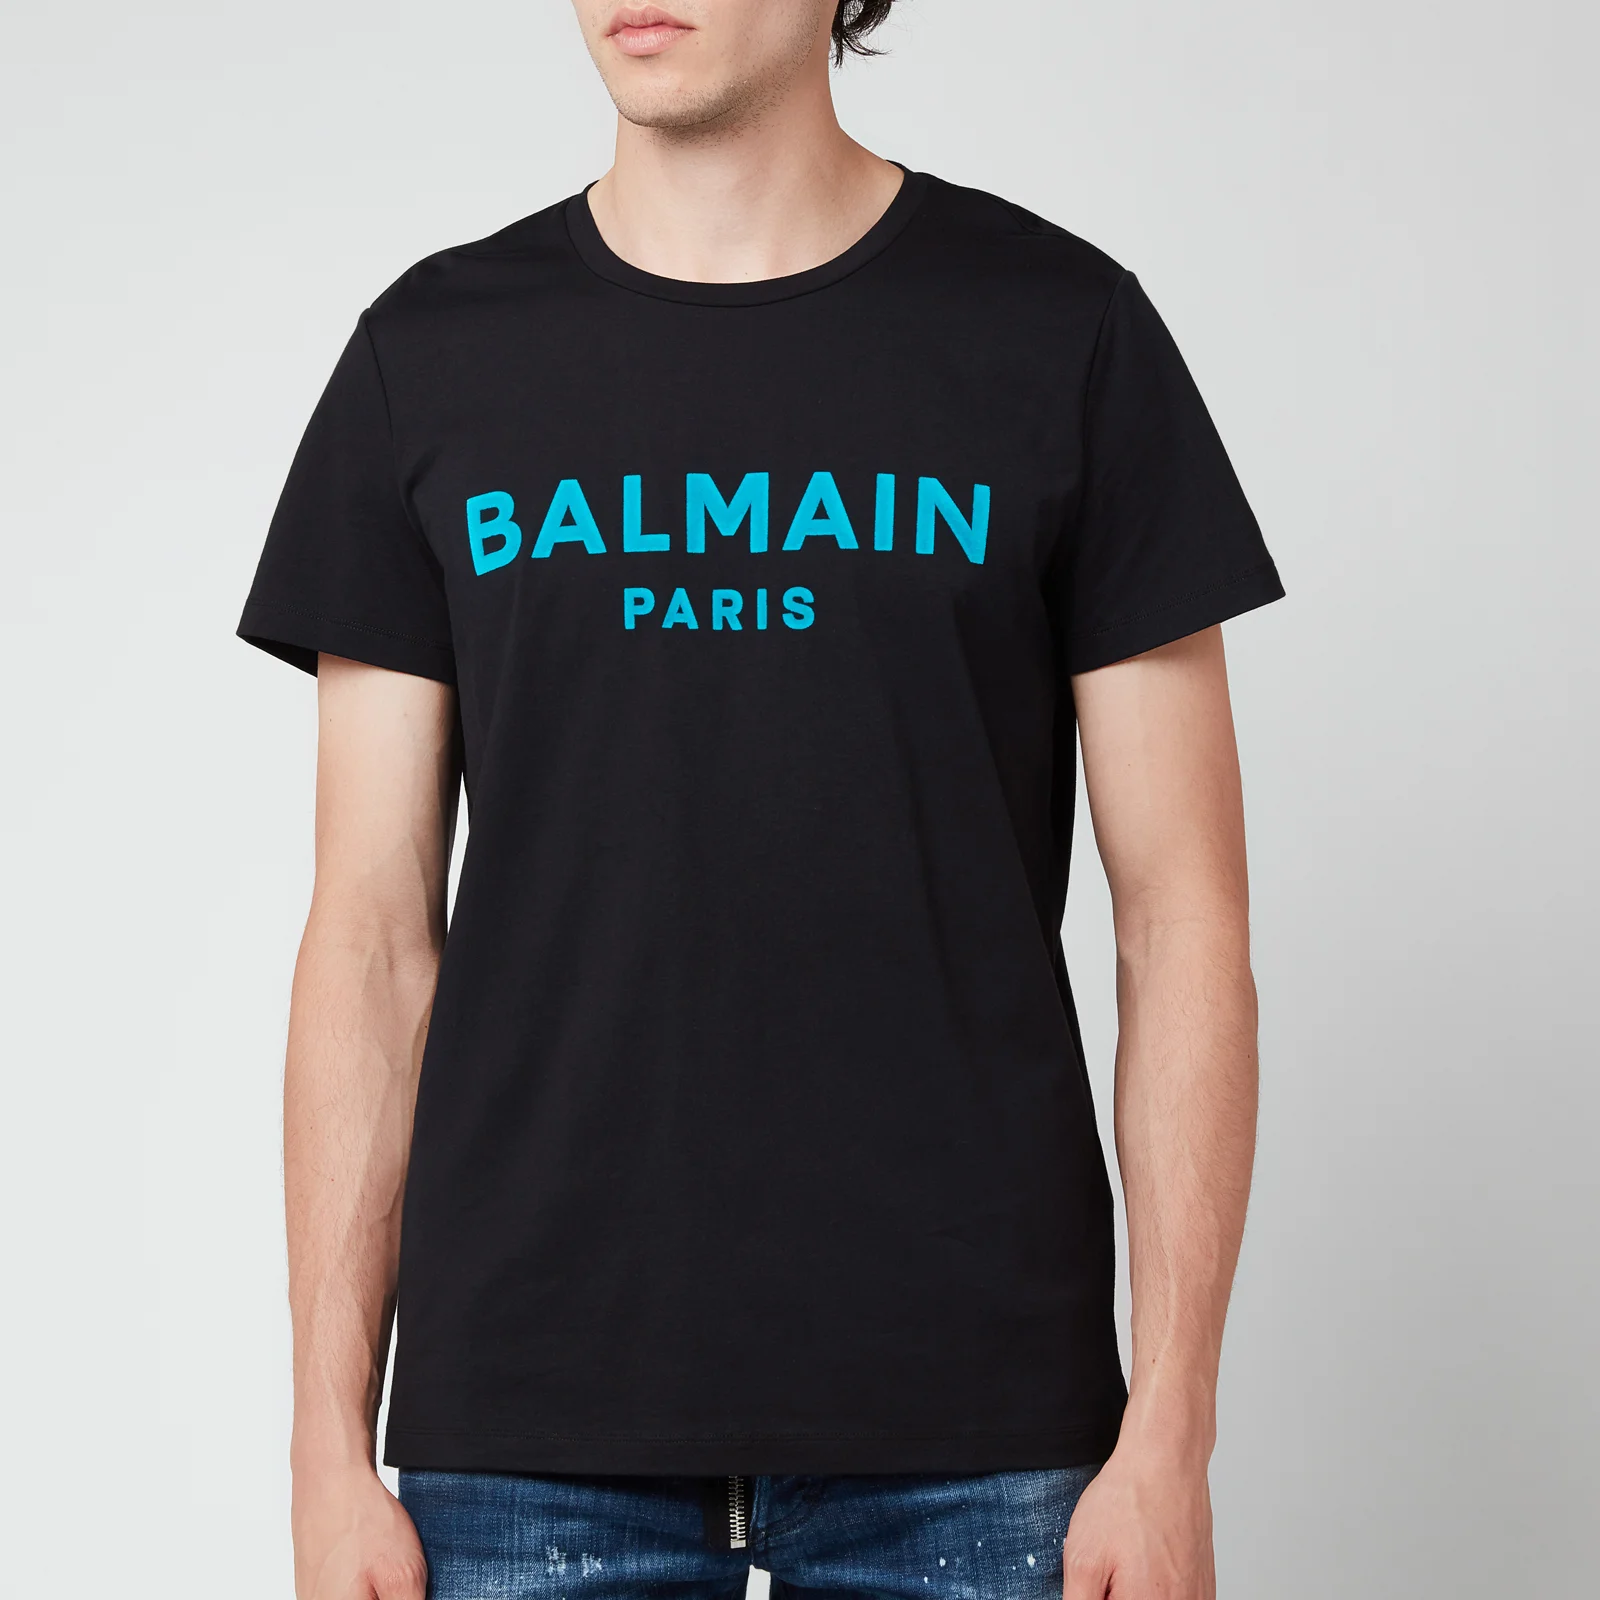 Balmain Men's Flock Logo T-Shirt - Black/Blue Image 1